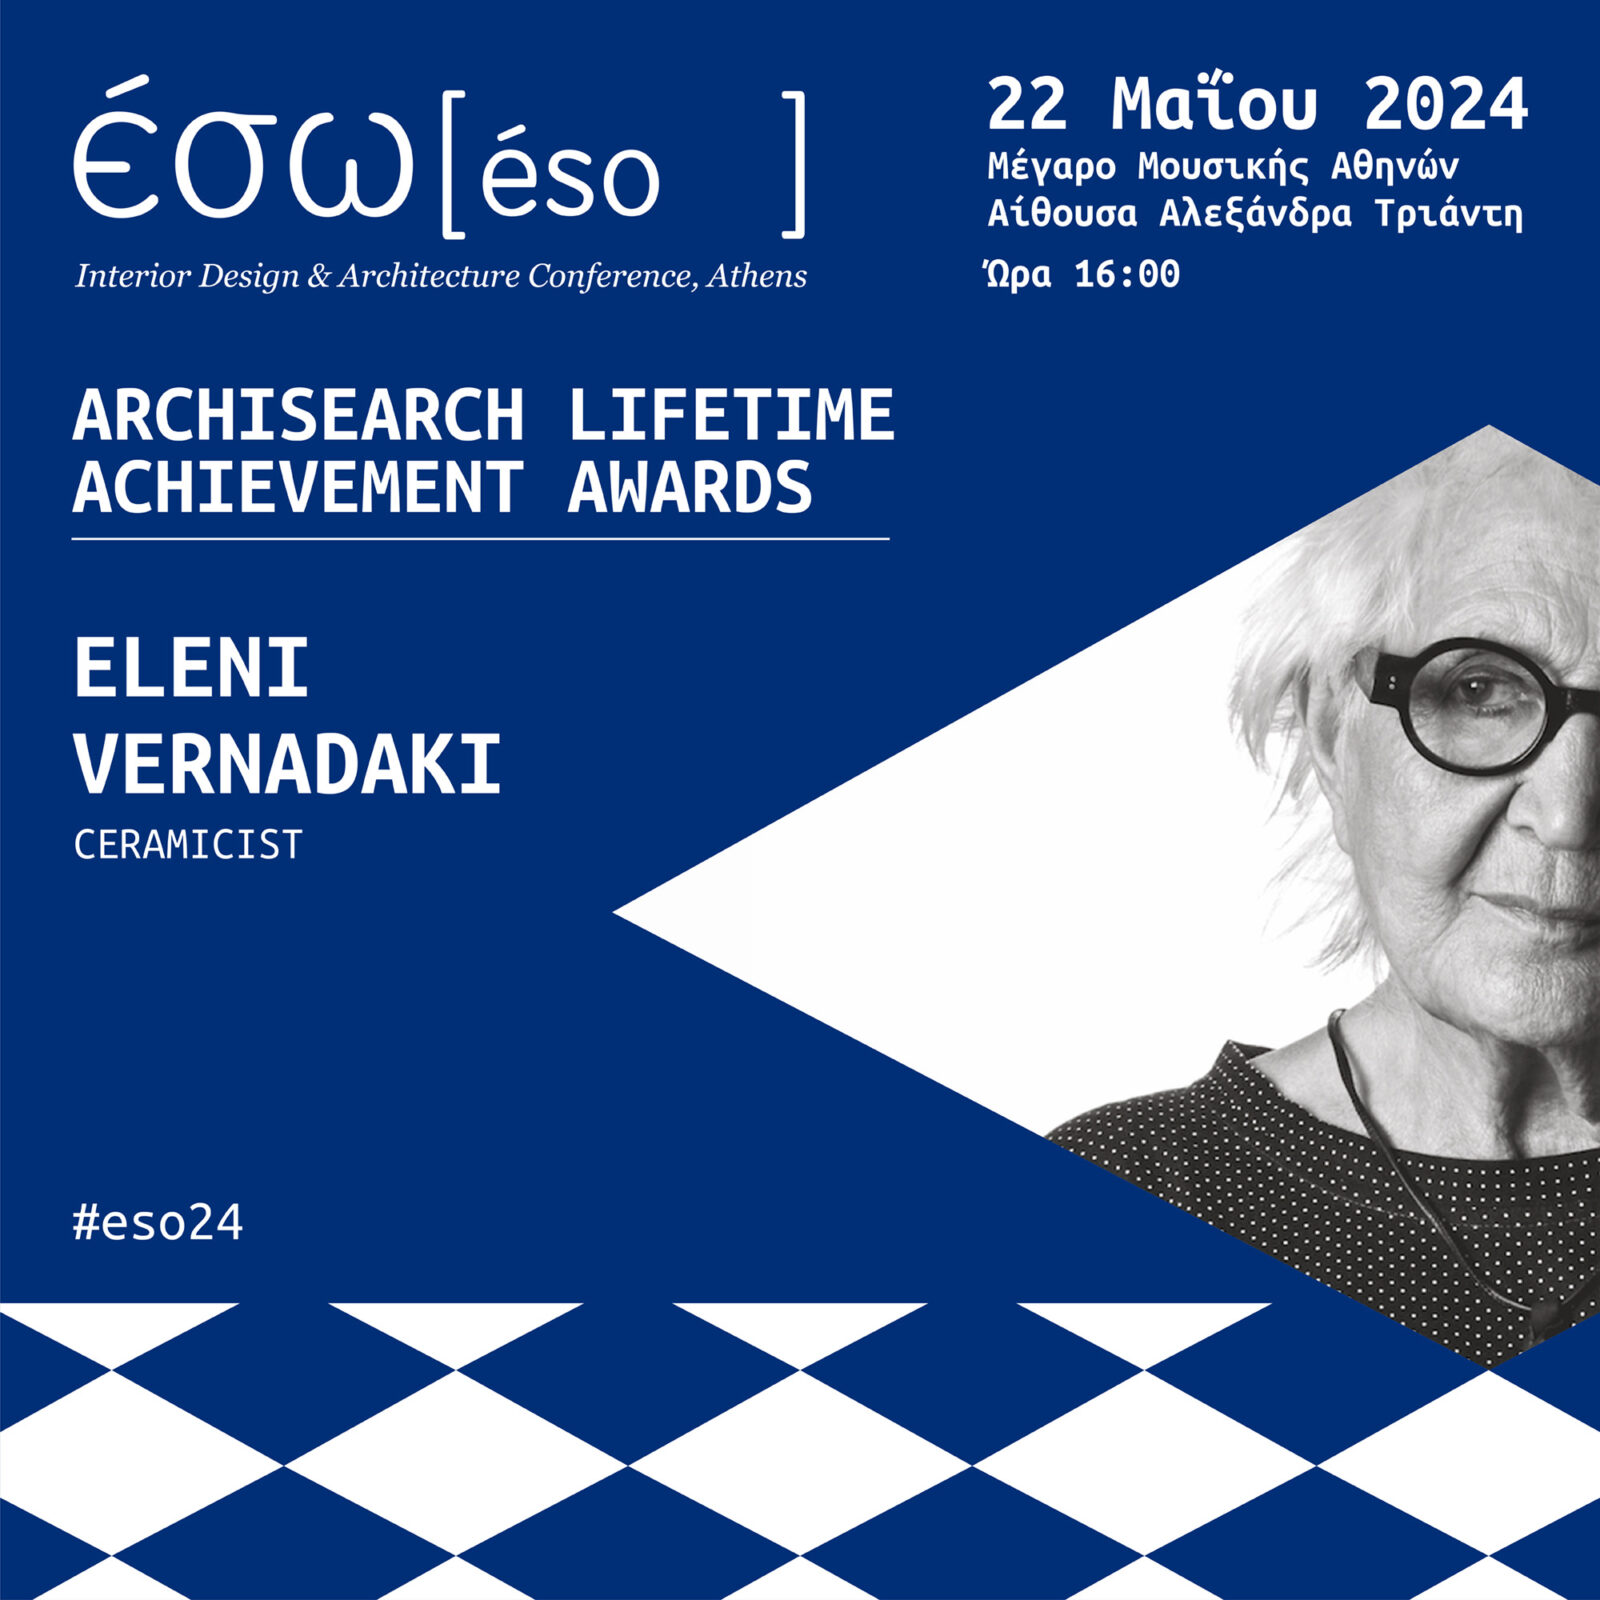 Archisearch Archisearch Lifetime Achievement Awards 2024: Τάσος Μπίρης, Μανόλης Κορρές & Ελένη Βερναδάκη /// 2 σπουδαίοι αρχιτέκτονες και 1 κορυφαία καλλιτέχνις βραβεύονται στη σκηνή της ημερίδας ΕΣΩ